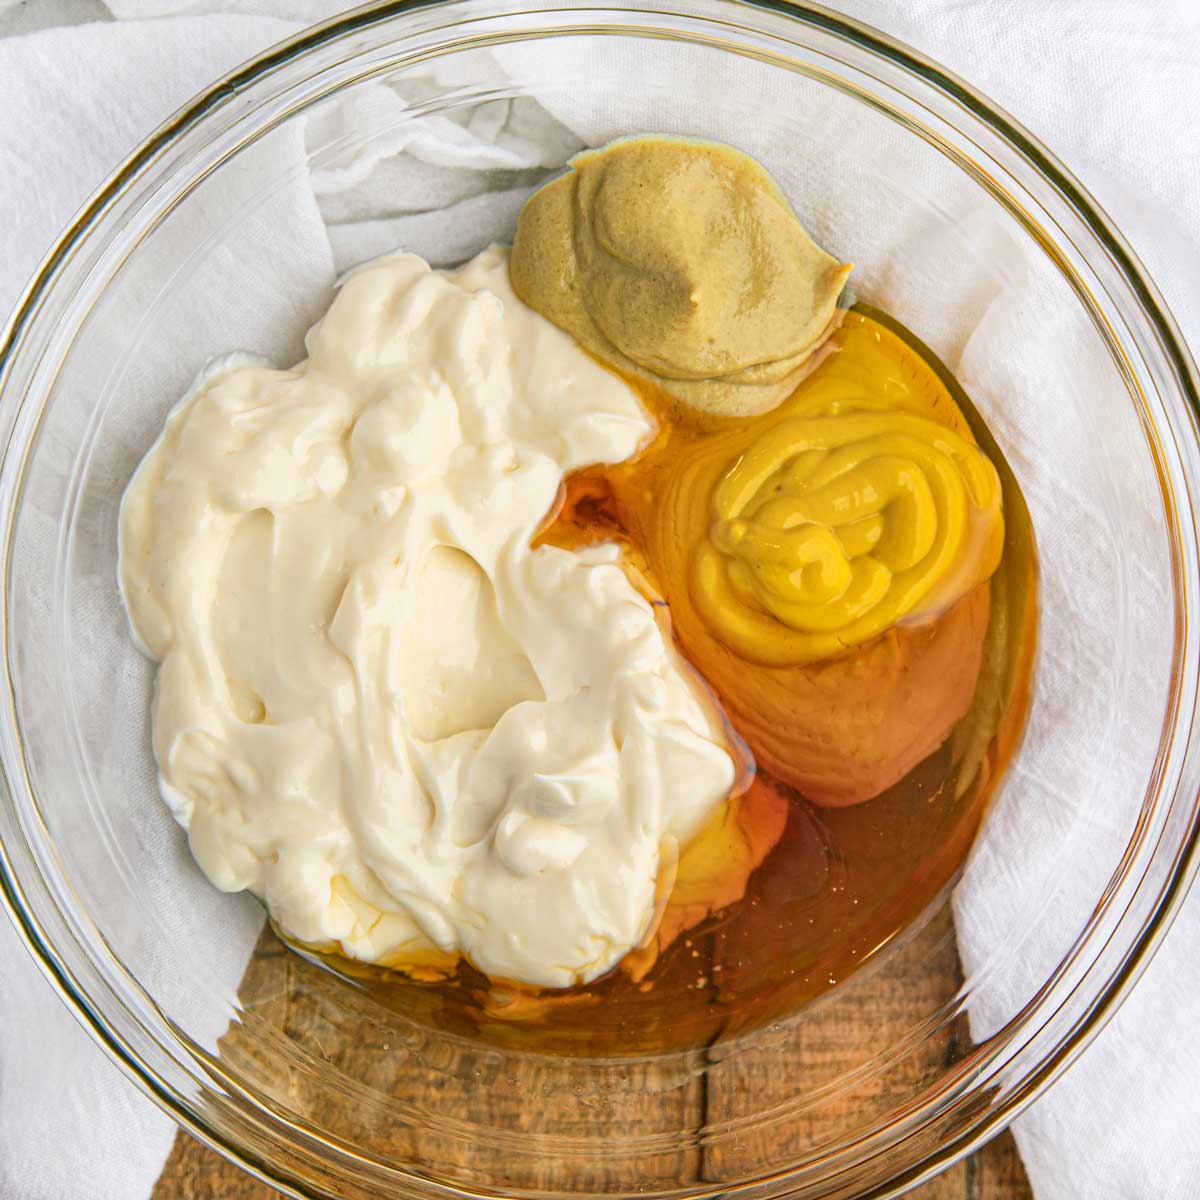 Honey Mustard ingredients in glass bowl